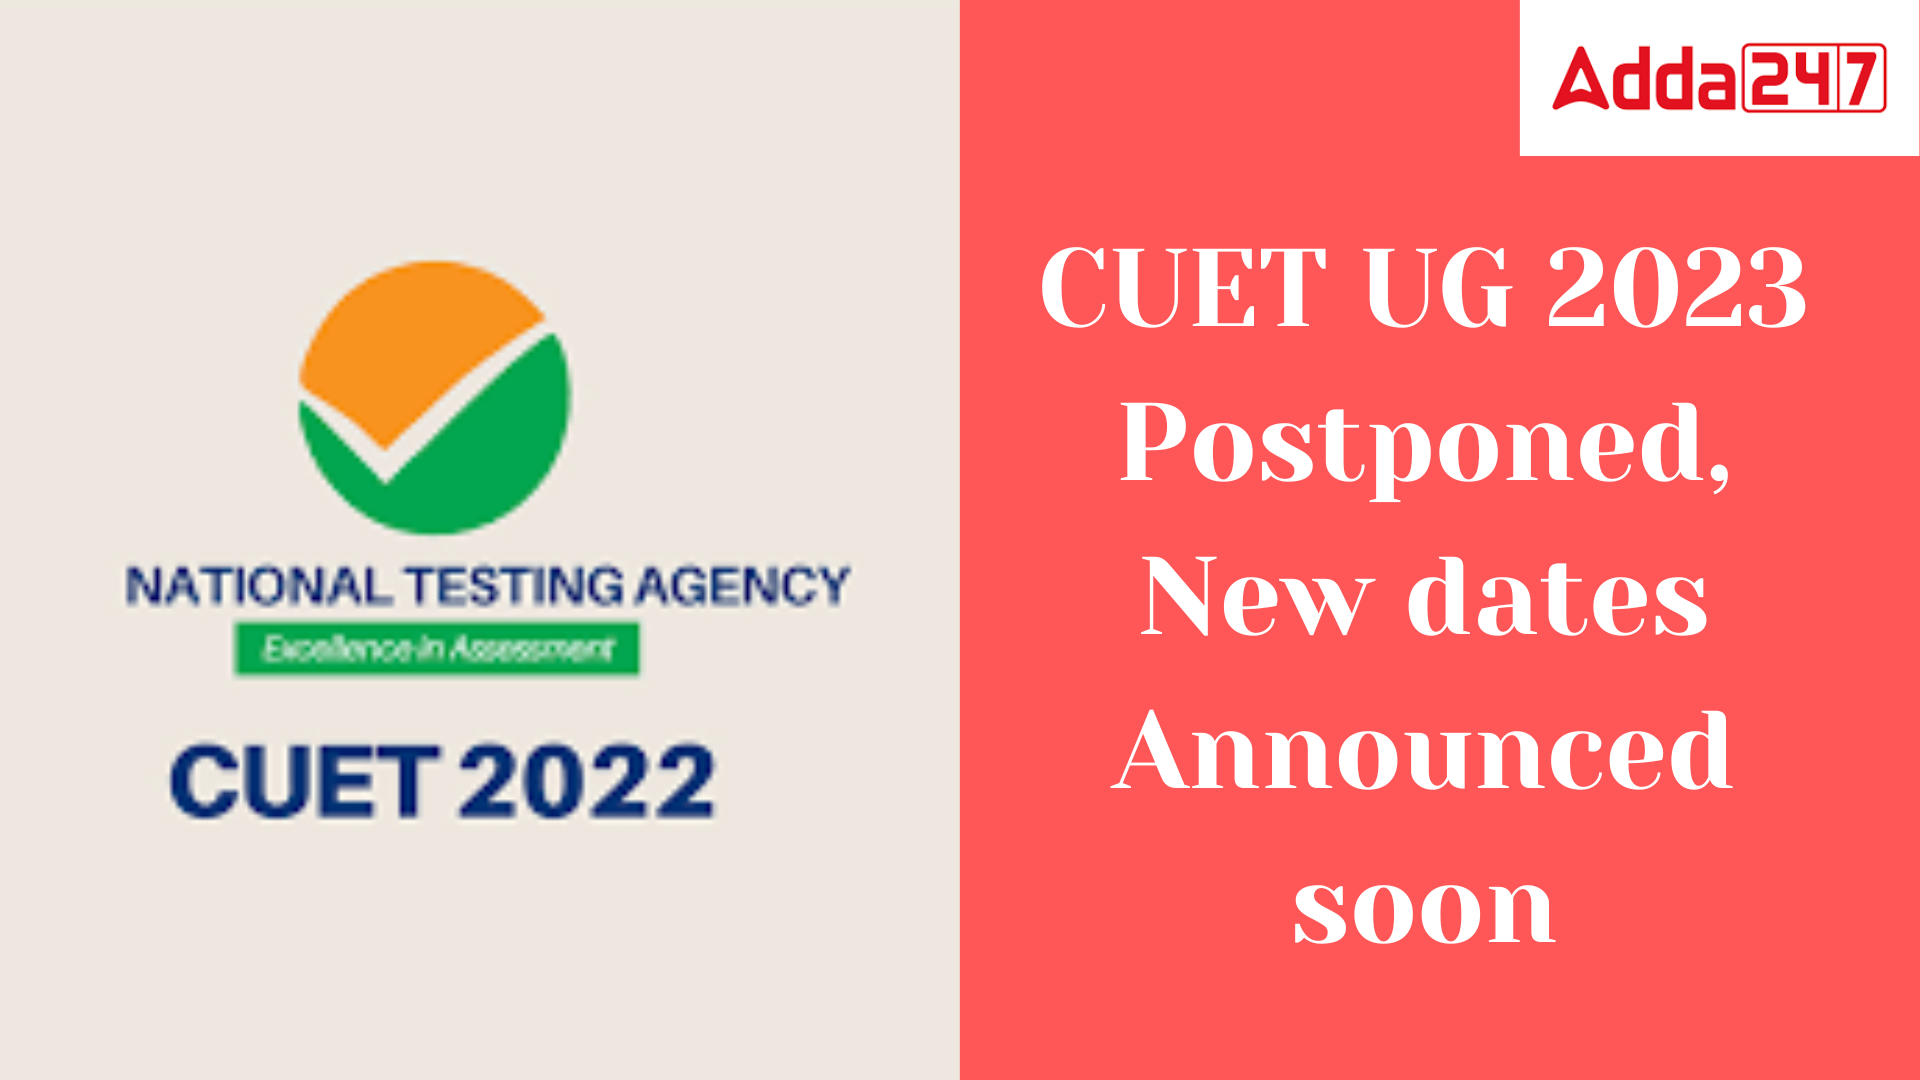 CUET UG 2023 Postponed, New dates Announced soon